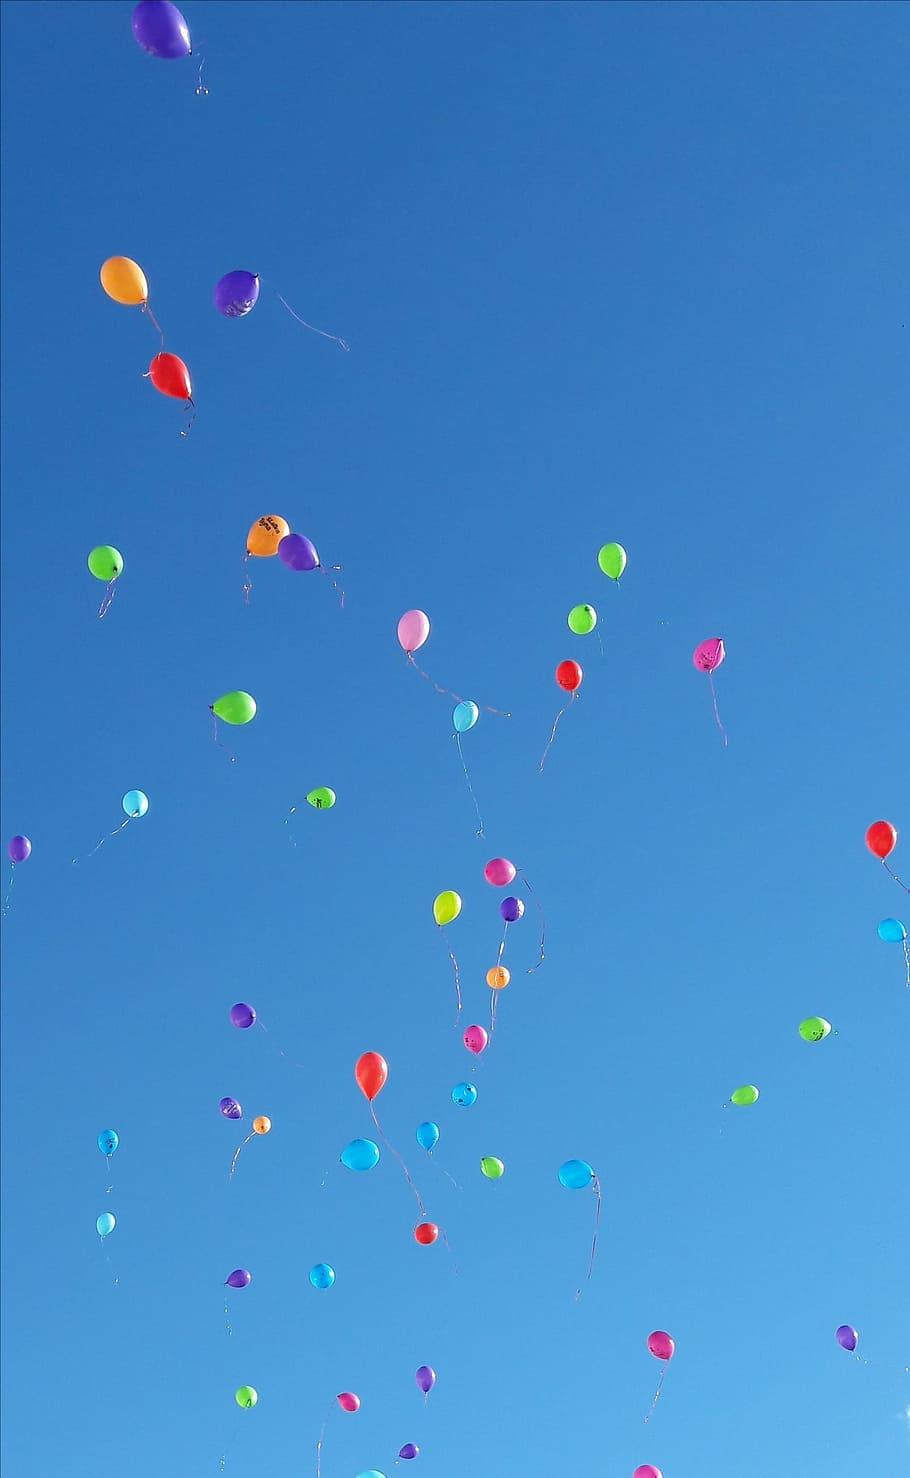 udara, balon, mengambang, helium, warna, multi-warna, terbang, biru, kelompok besar objek, langit